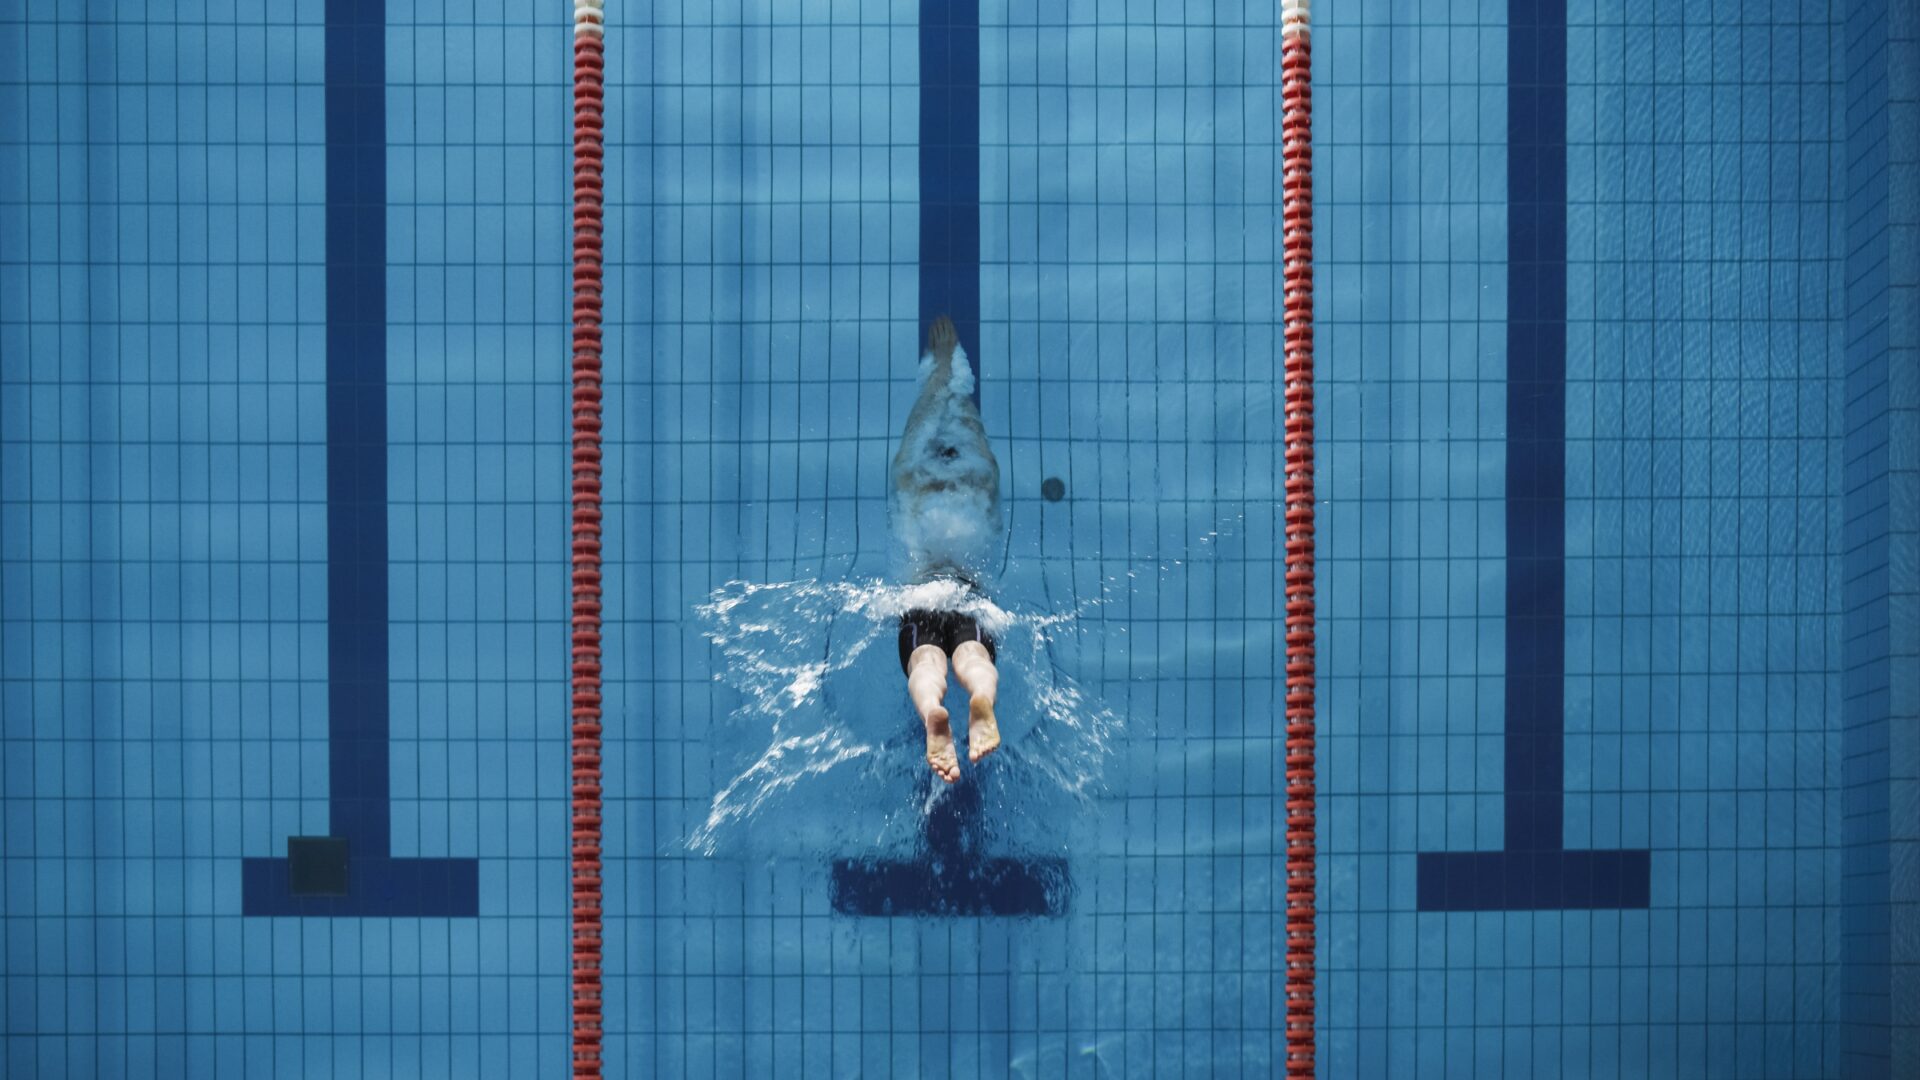 Man diving into a swimming lane